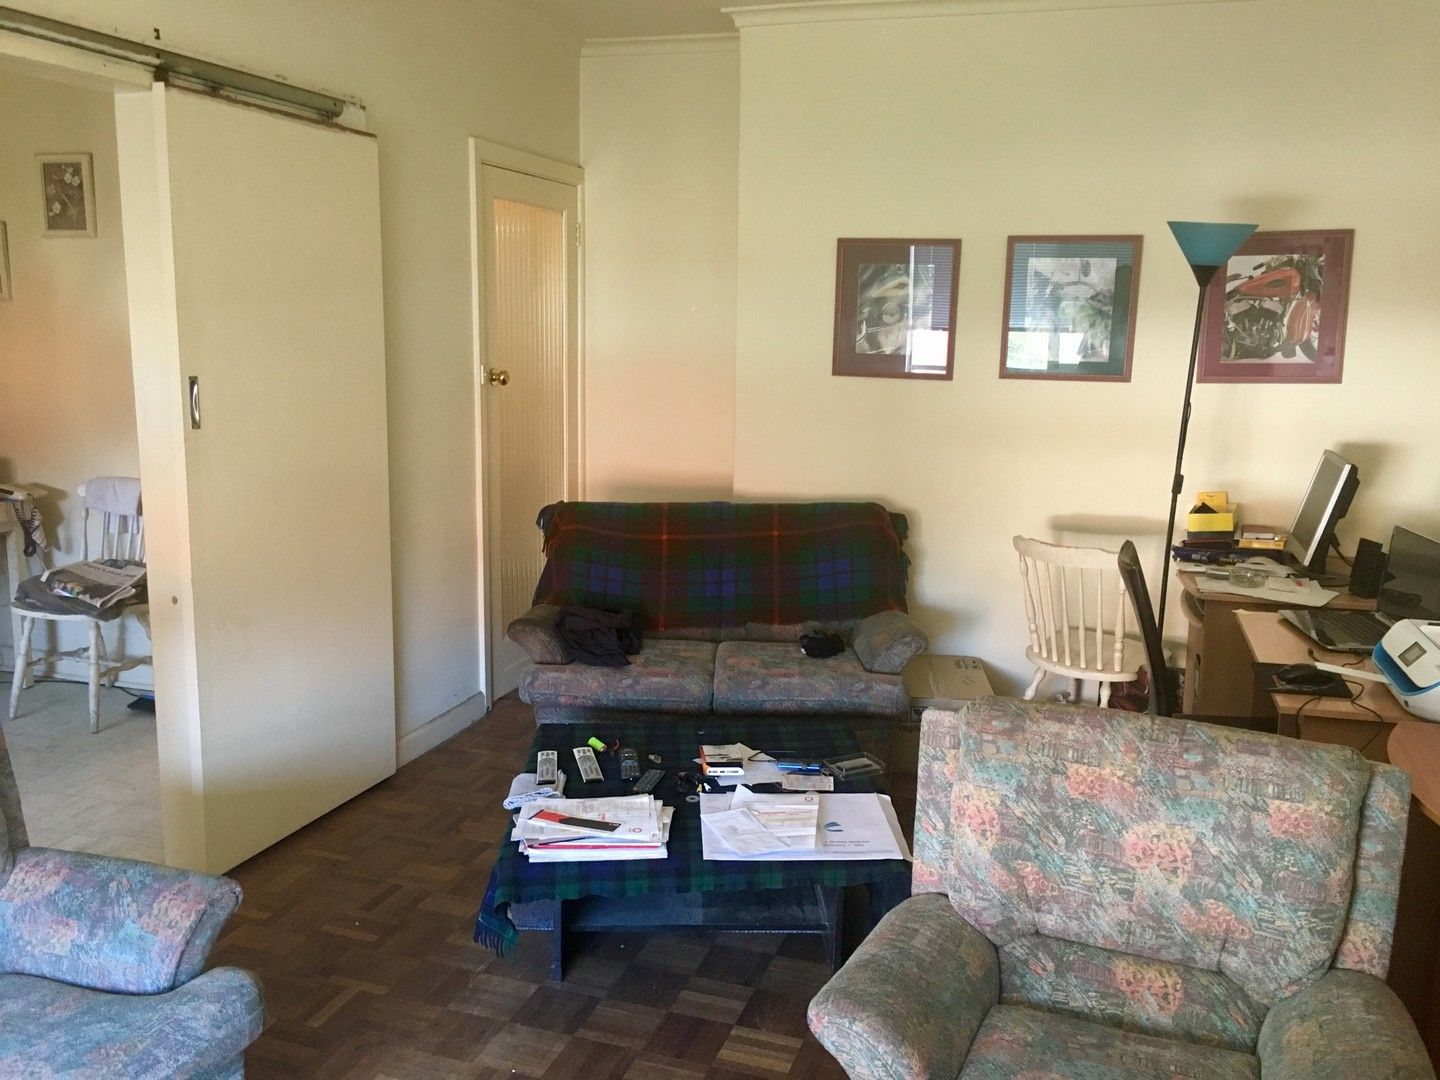 2 bedrooms Apartment / Unit / Flat in 7/19 Cardigan Street ST KILDA EAST VIC, 3183